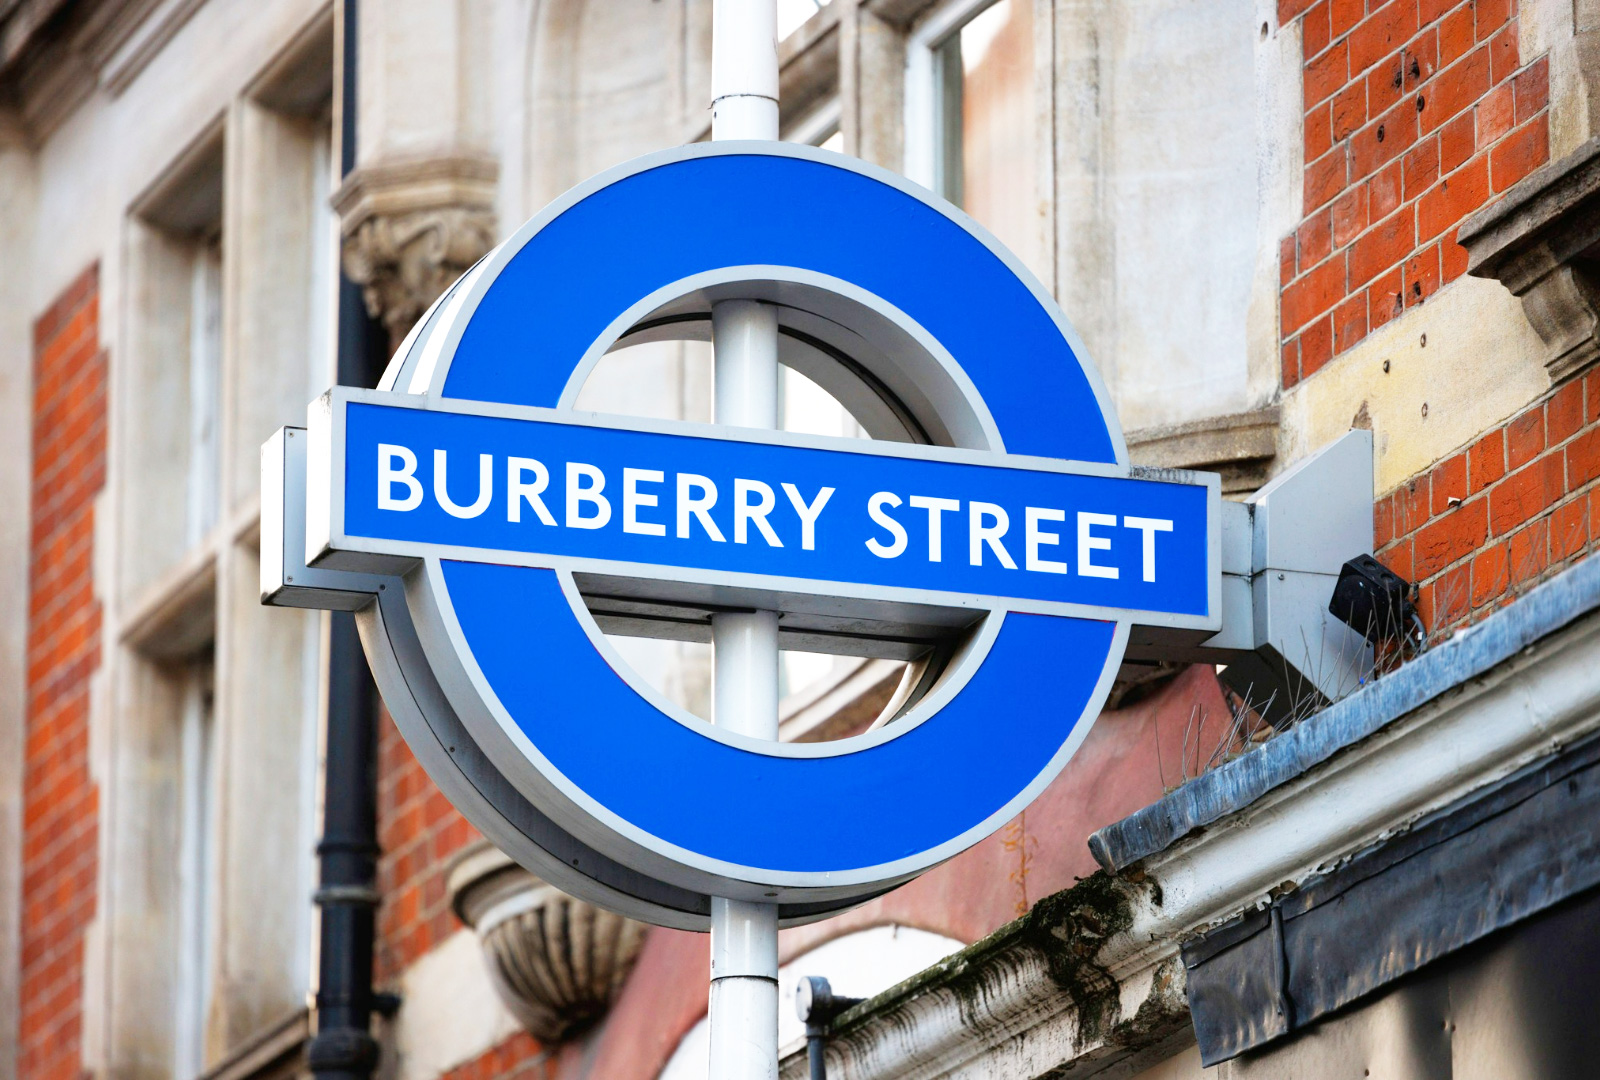 Burberry Street roundel at Bond Street station